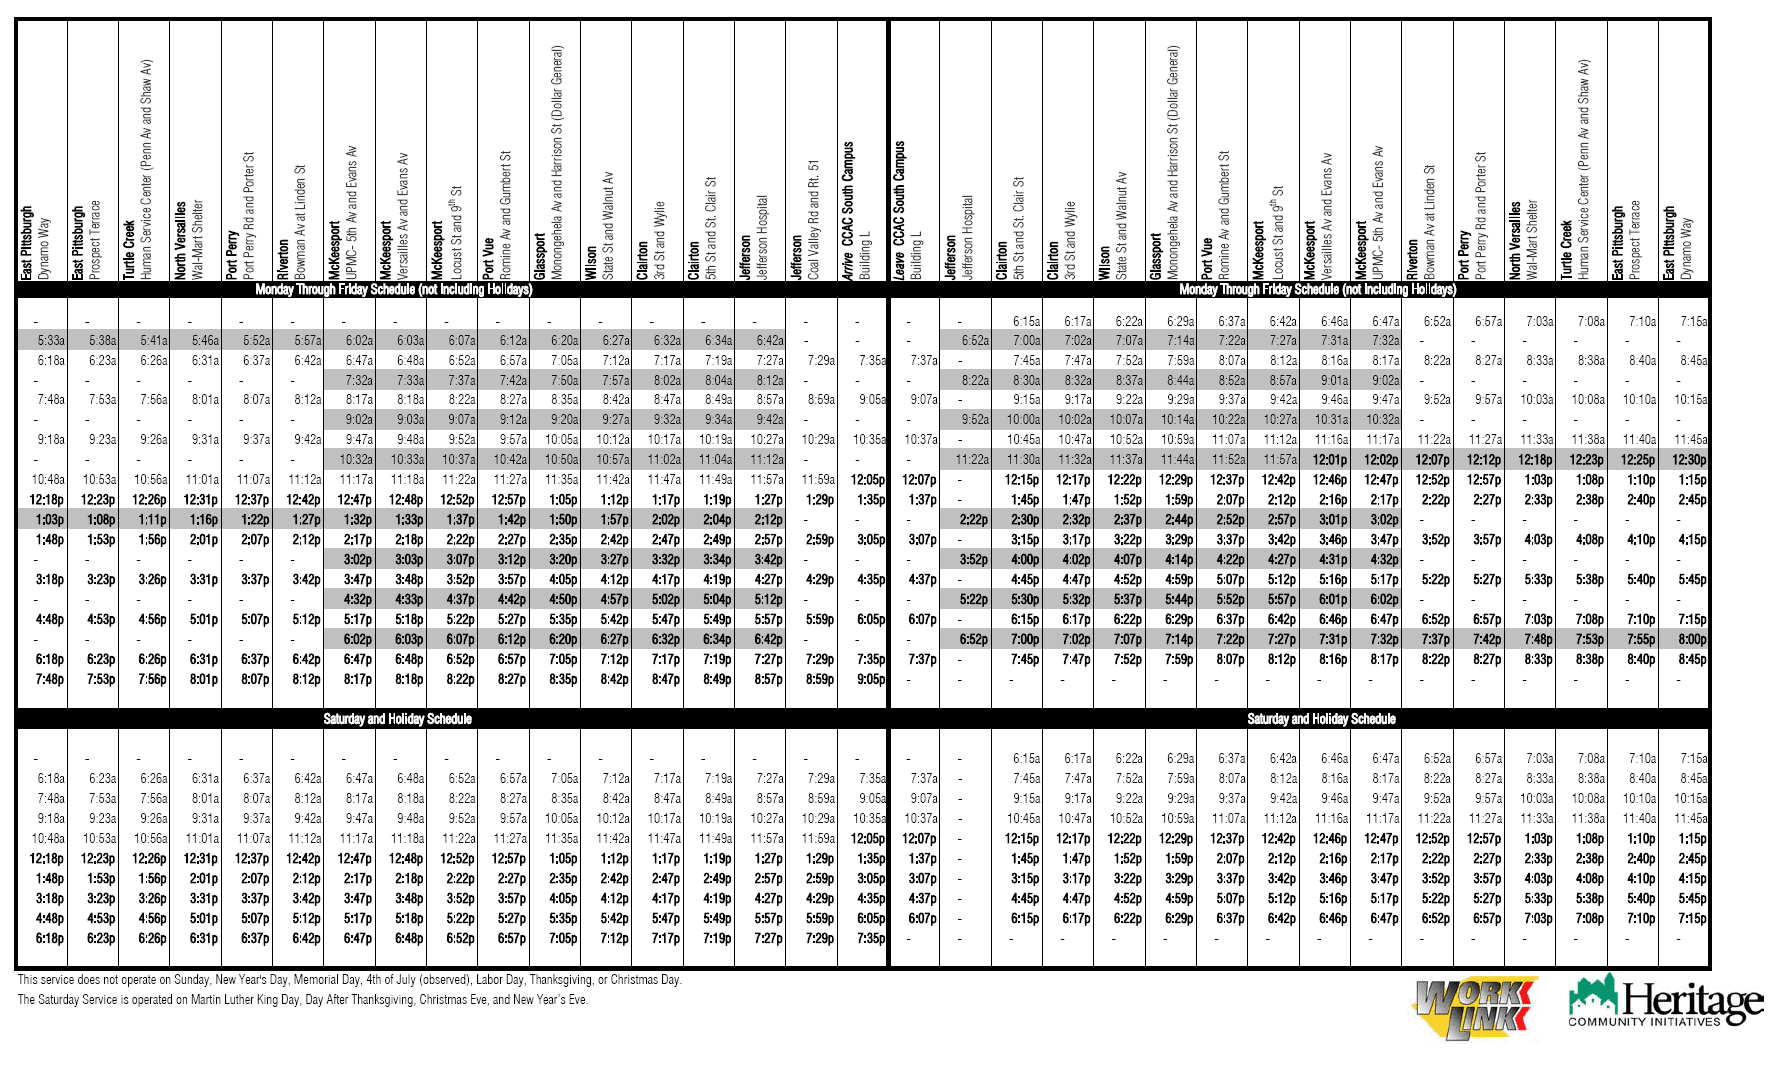 nj-transit-163-bus-schedule-pdf-images-veripowerup